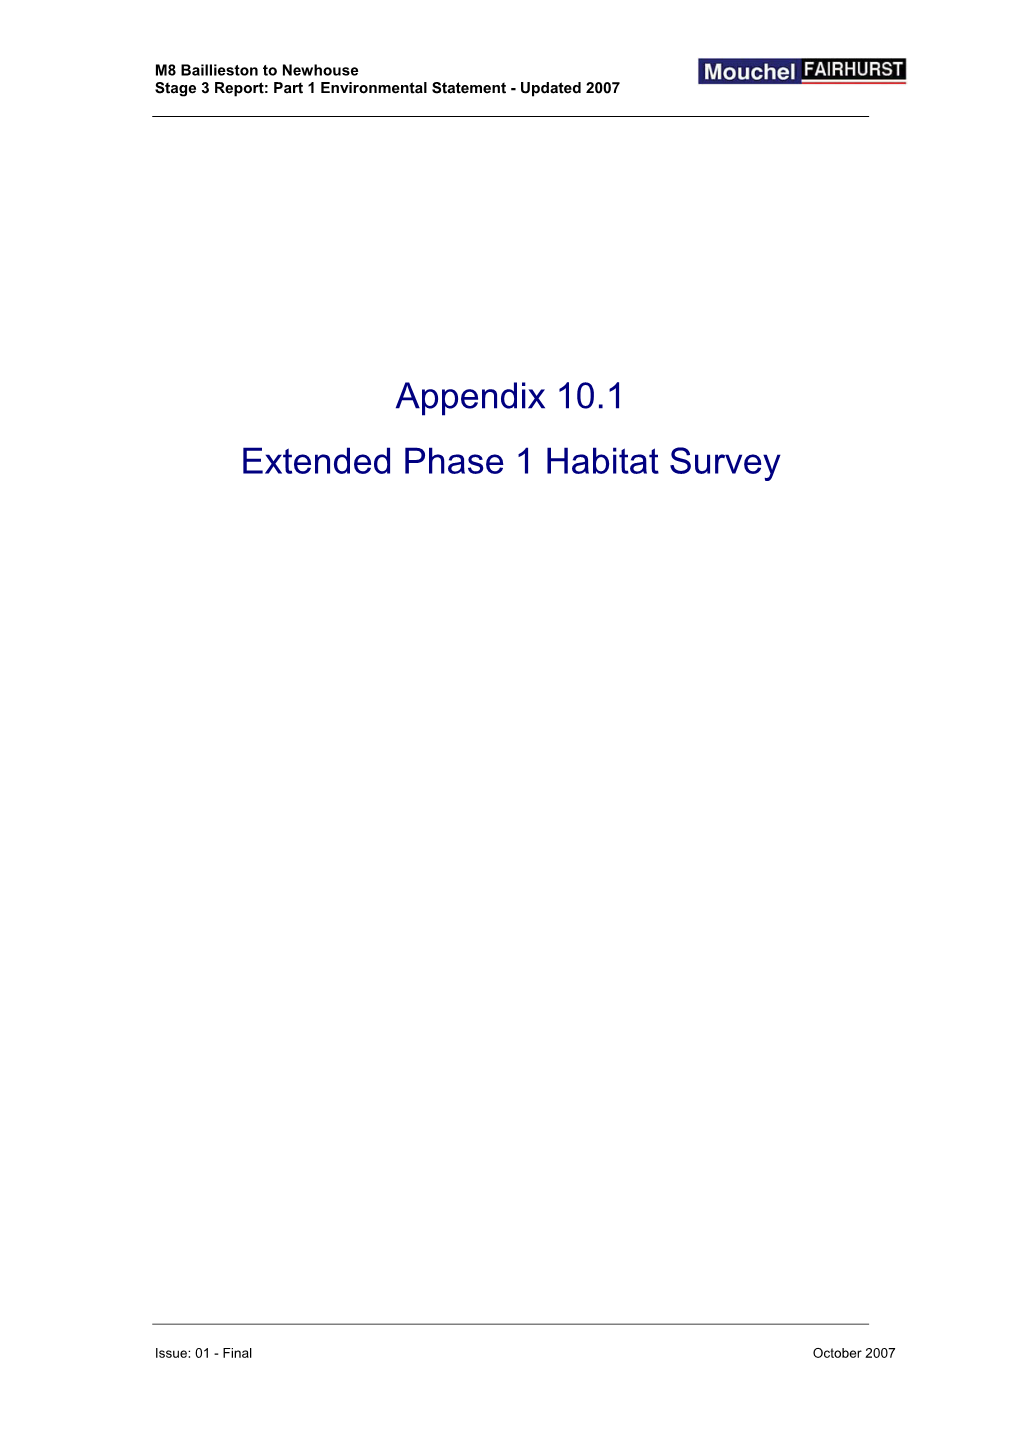 Appendix 10.1 Extended Phase 1 Habitat Survey